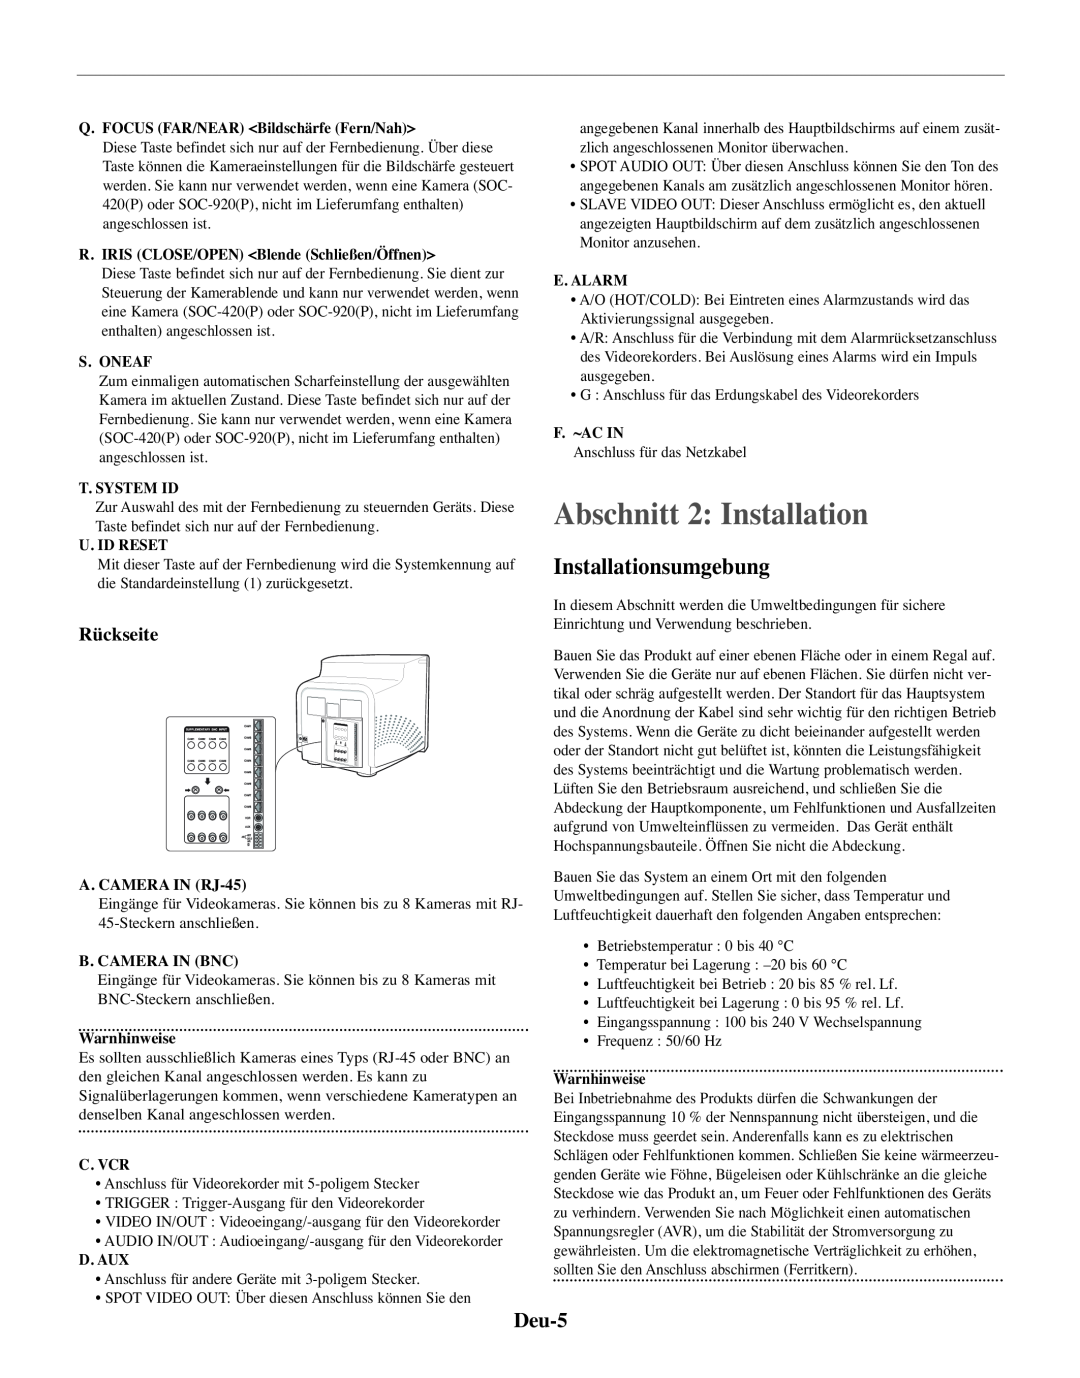 Samsung SMO-210MP/UMG Abschnitt 2 Installation, Installationsumgebung, Deu-5, Rückseite, S. Oneaf, T. System Id, C. Vcr 